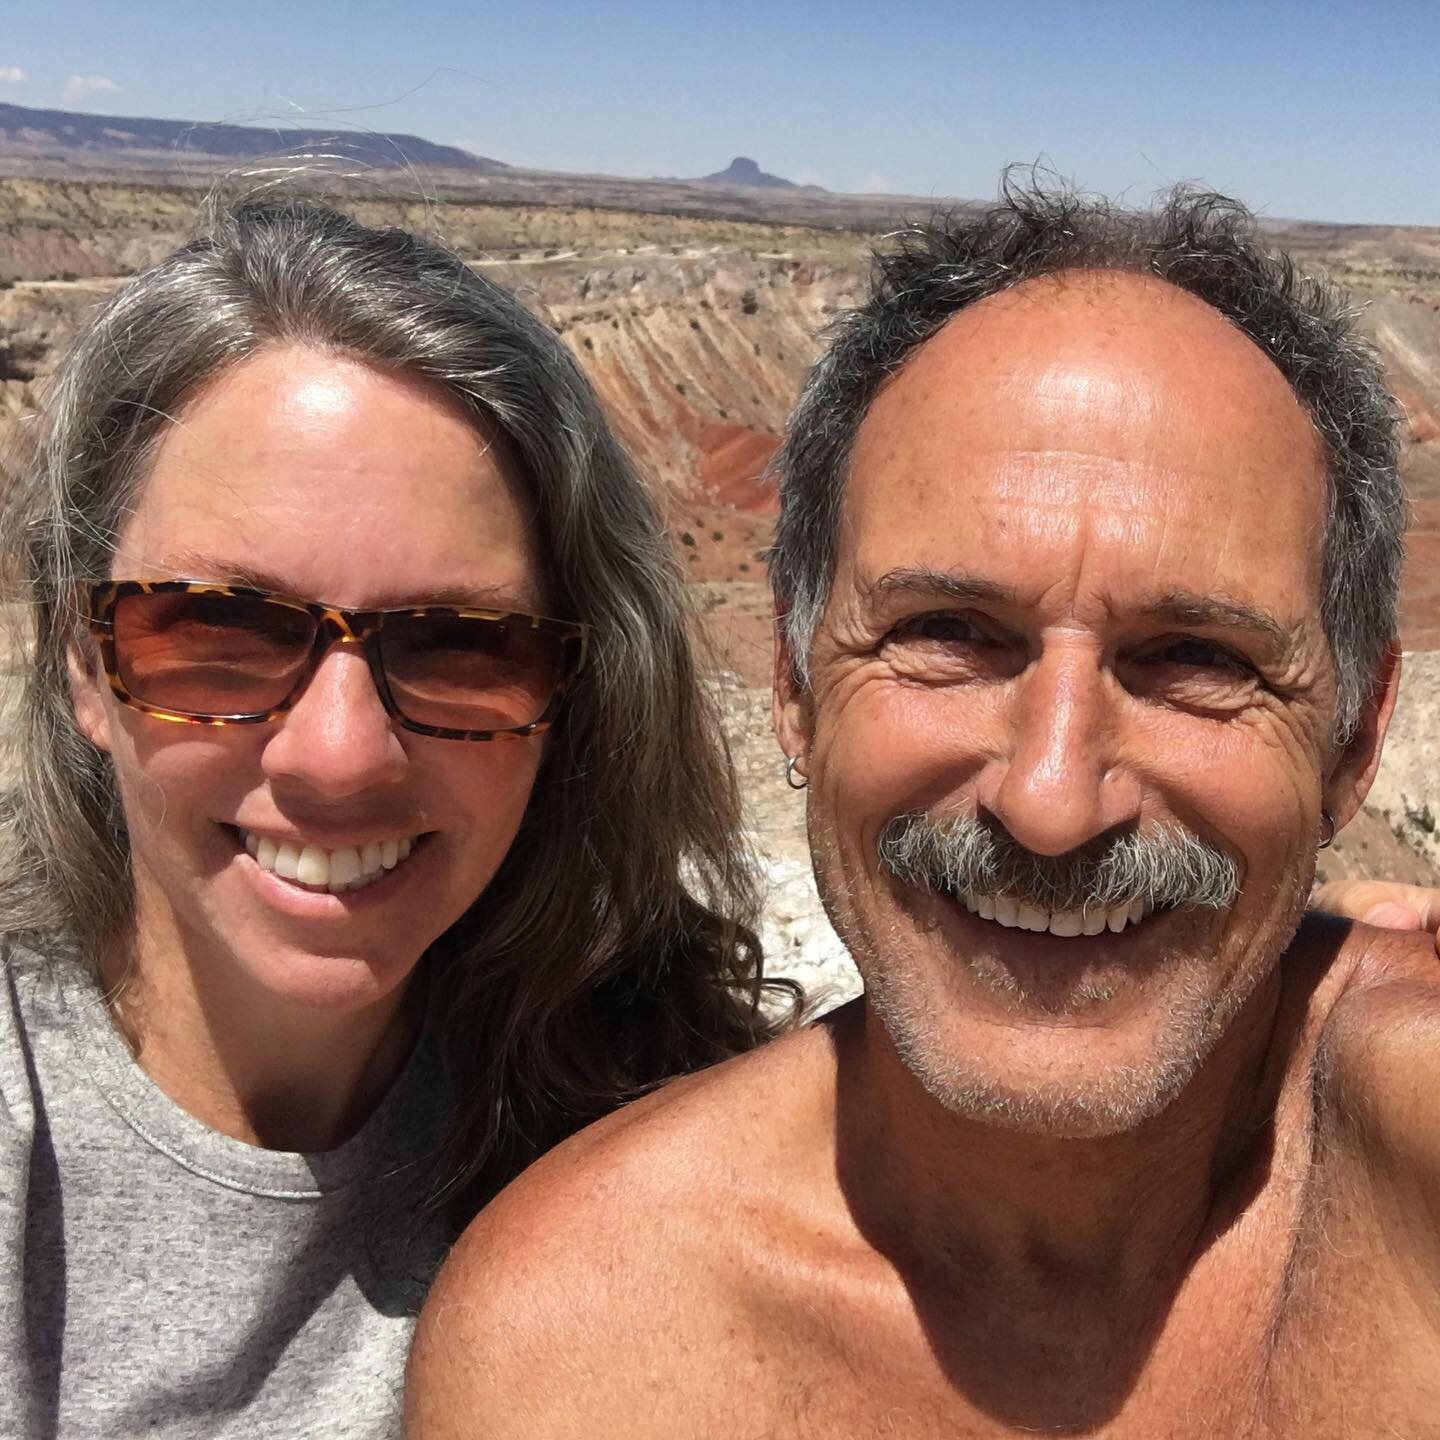 Exploring New Mexico and all its beauty (and muck)
.
.
#timetoplay #hikenm #nmoutdoors #getoutside #weekendadventures #sanysidro #whitemesa @salomon #favoritehikingshoes